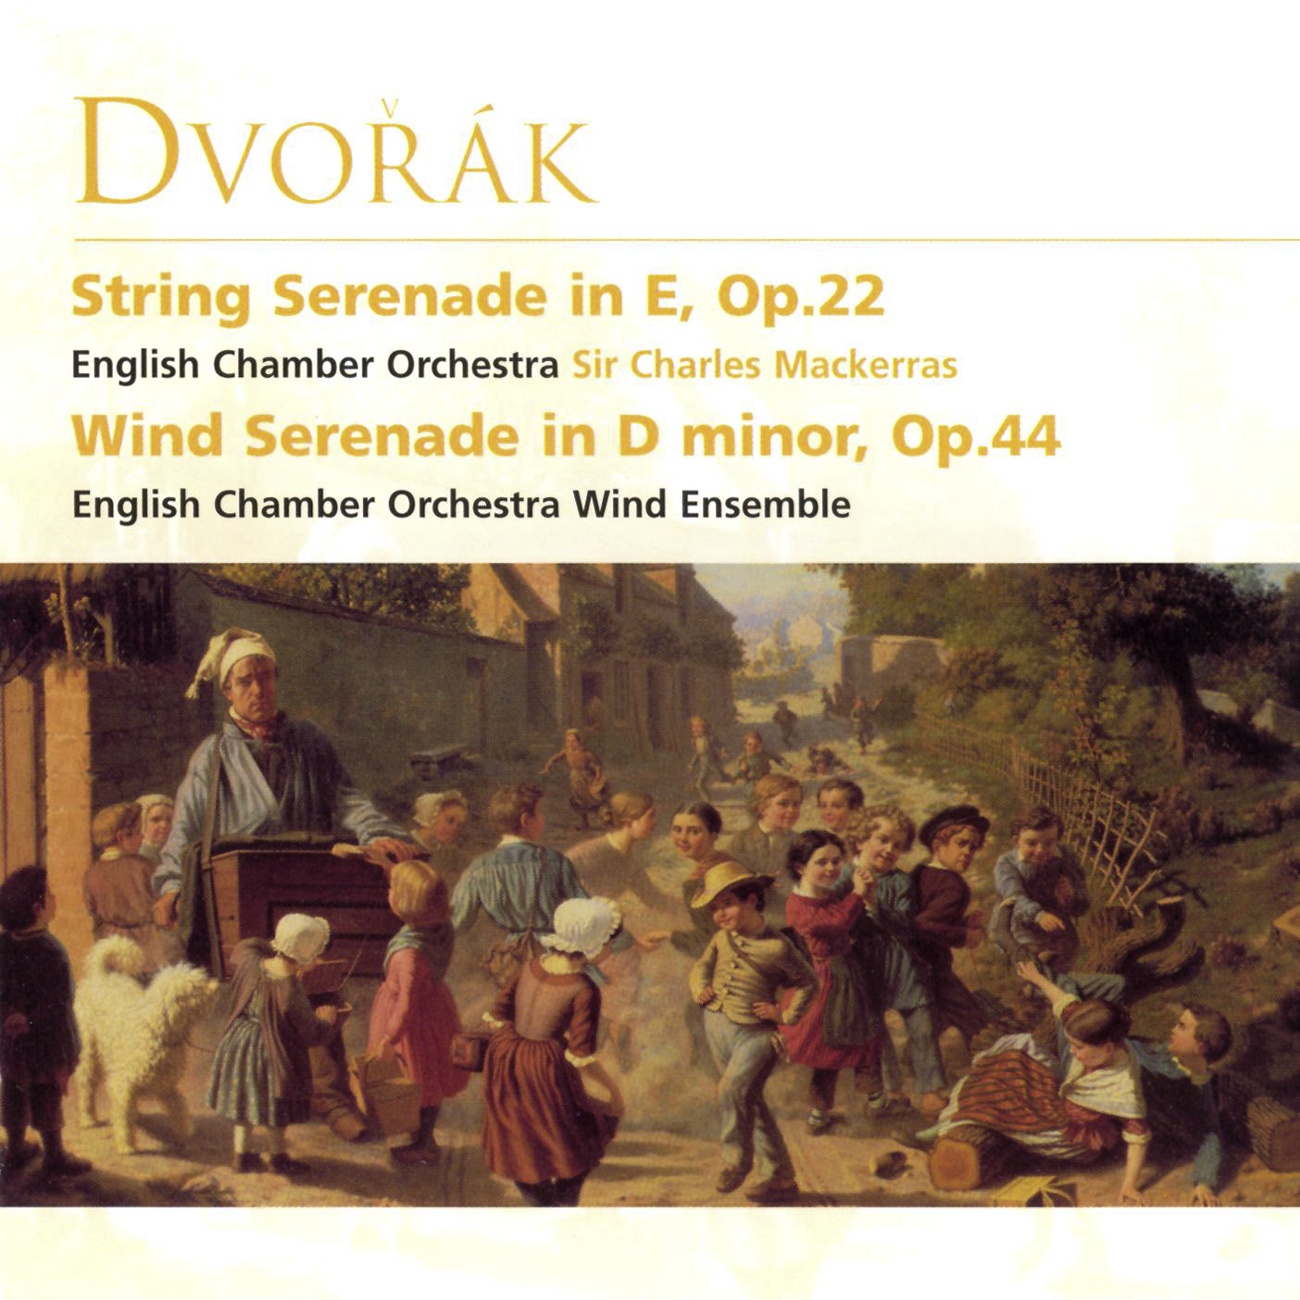 Wind Serenade in D minor B77 ( Op.44): I.       Moderato, quasi marcia